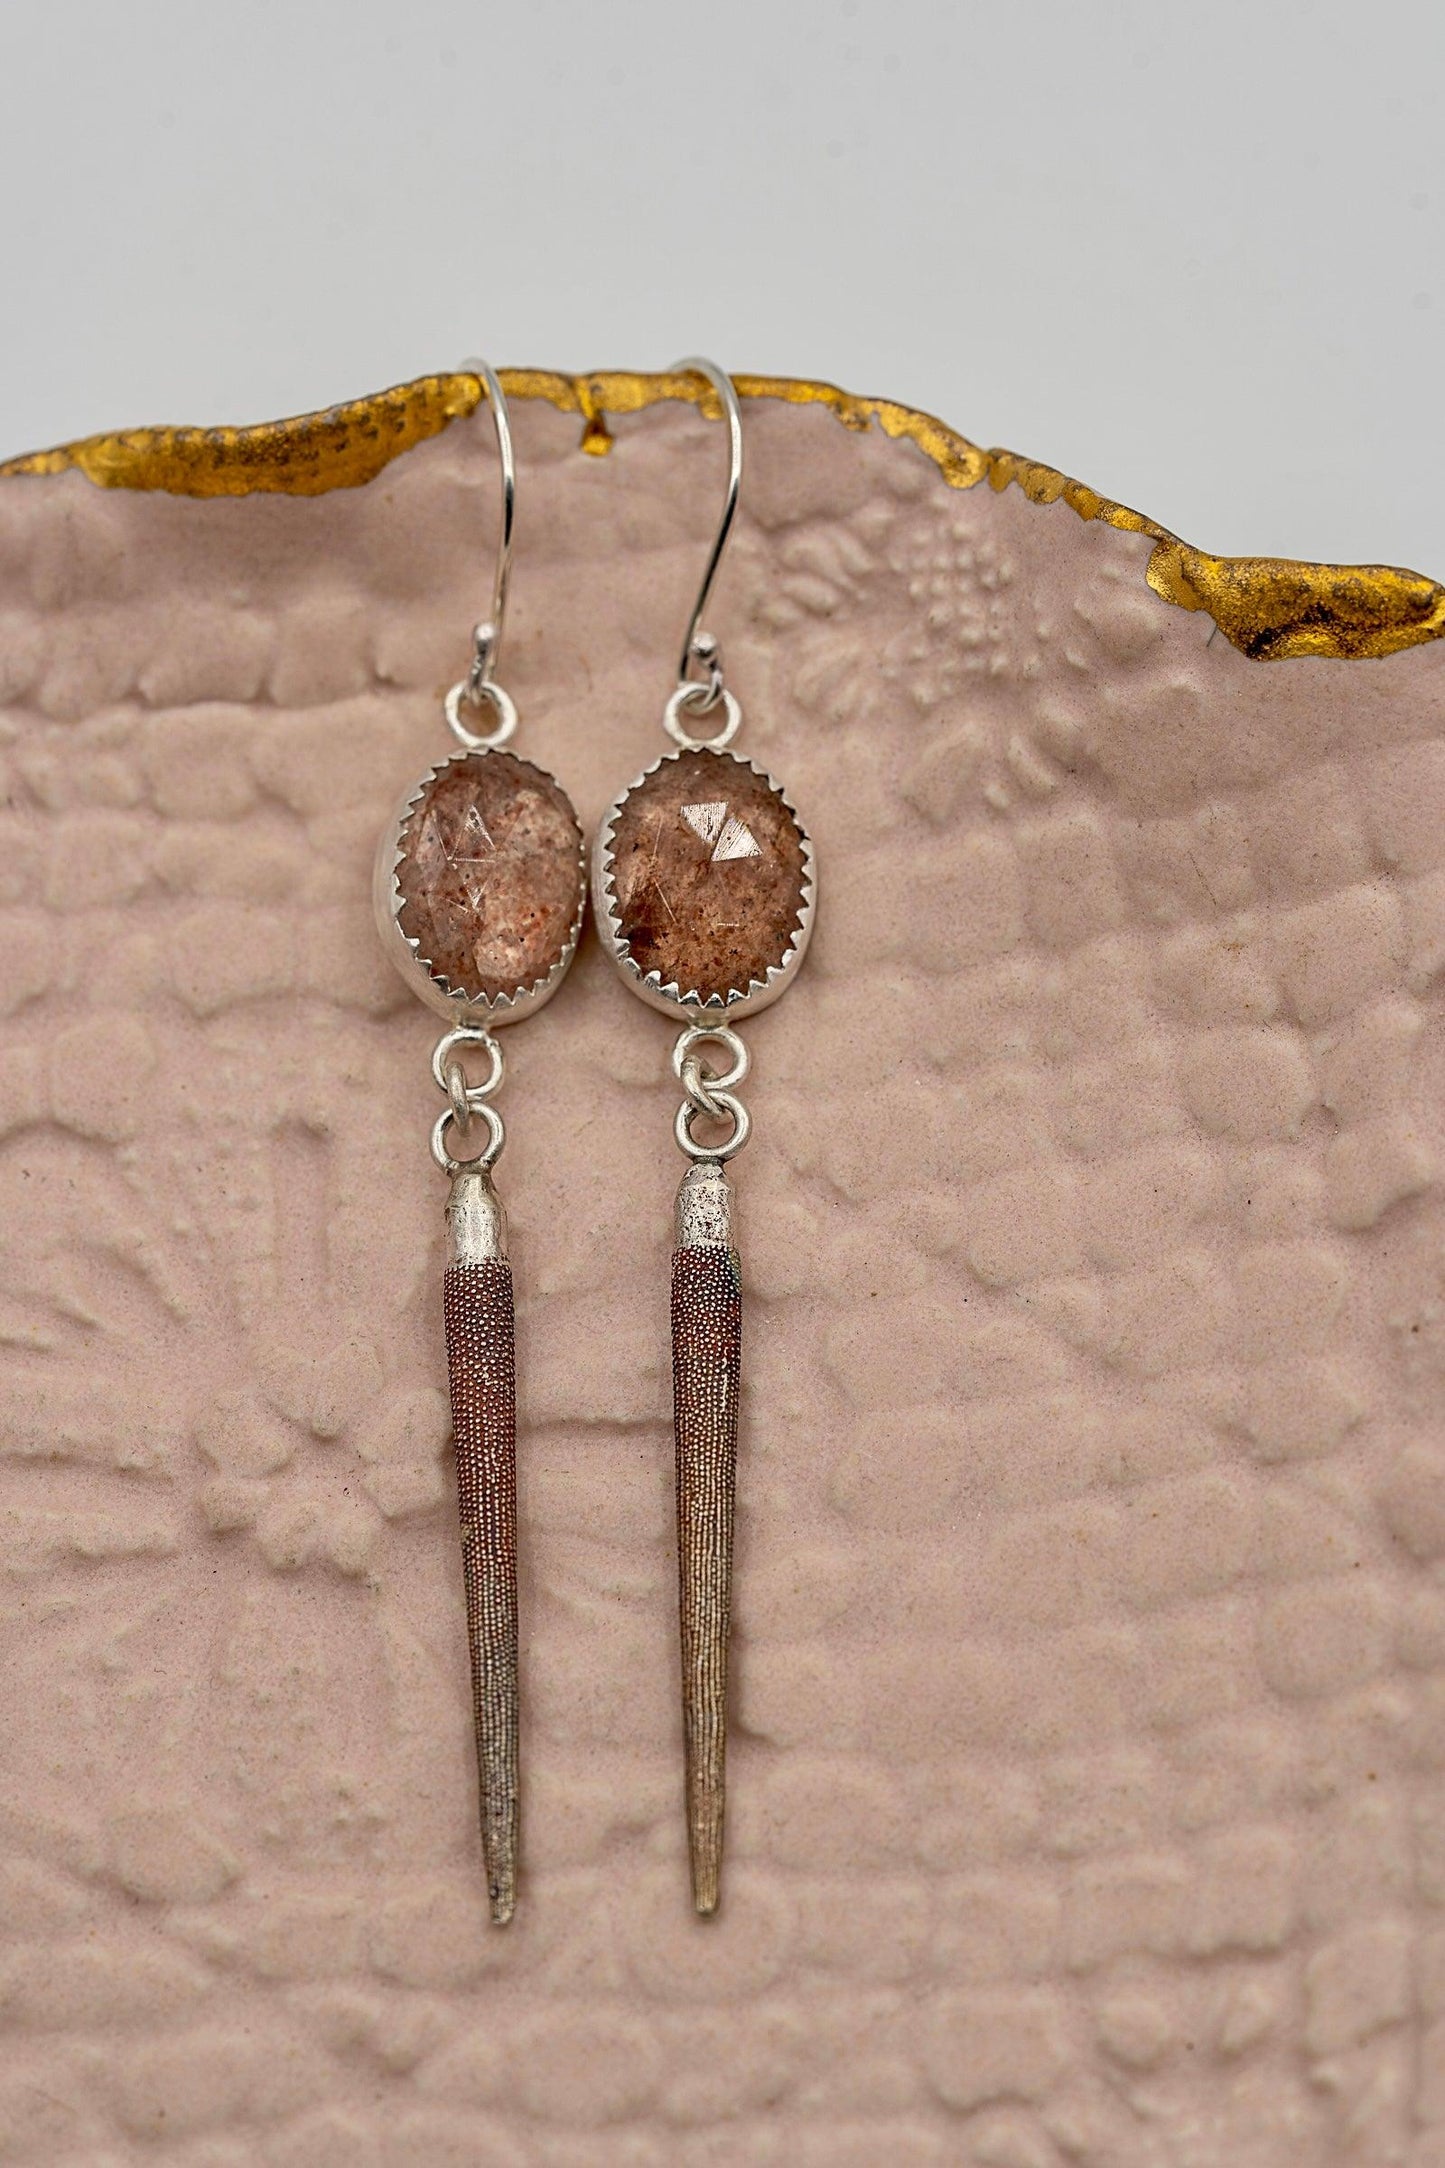 Strawberry Quartz & Sea Urchin Earrings - Deodata Jewelry Design